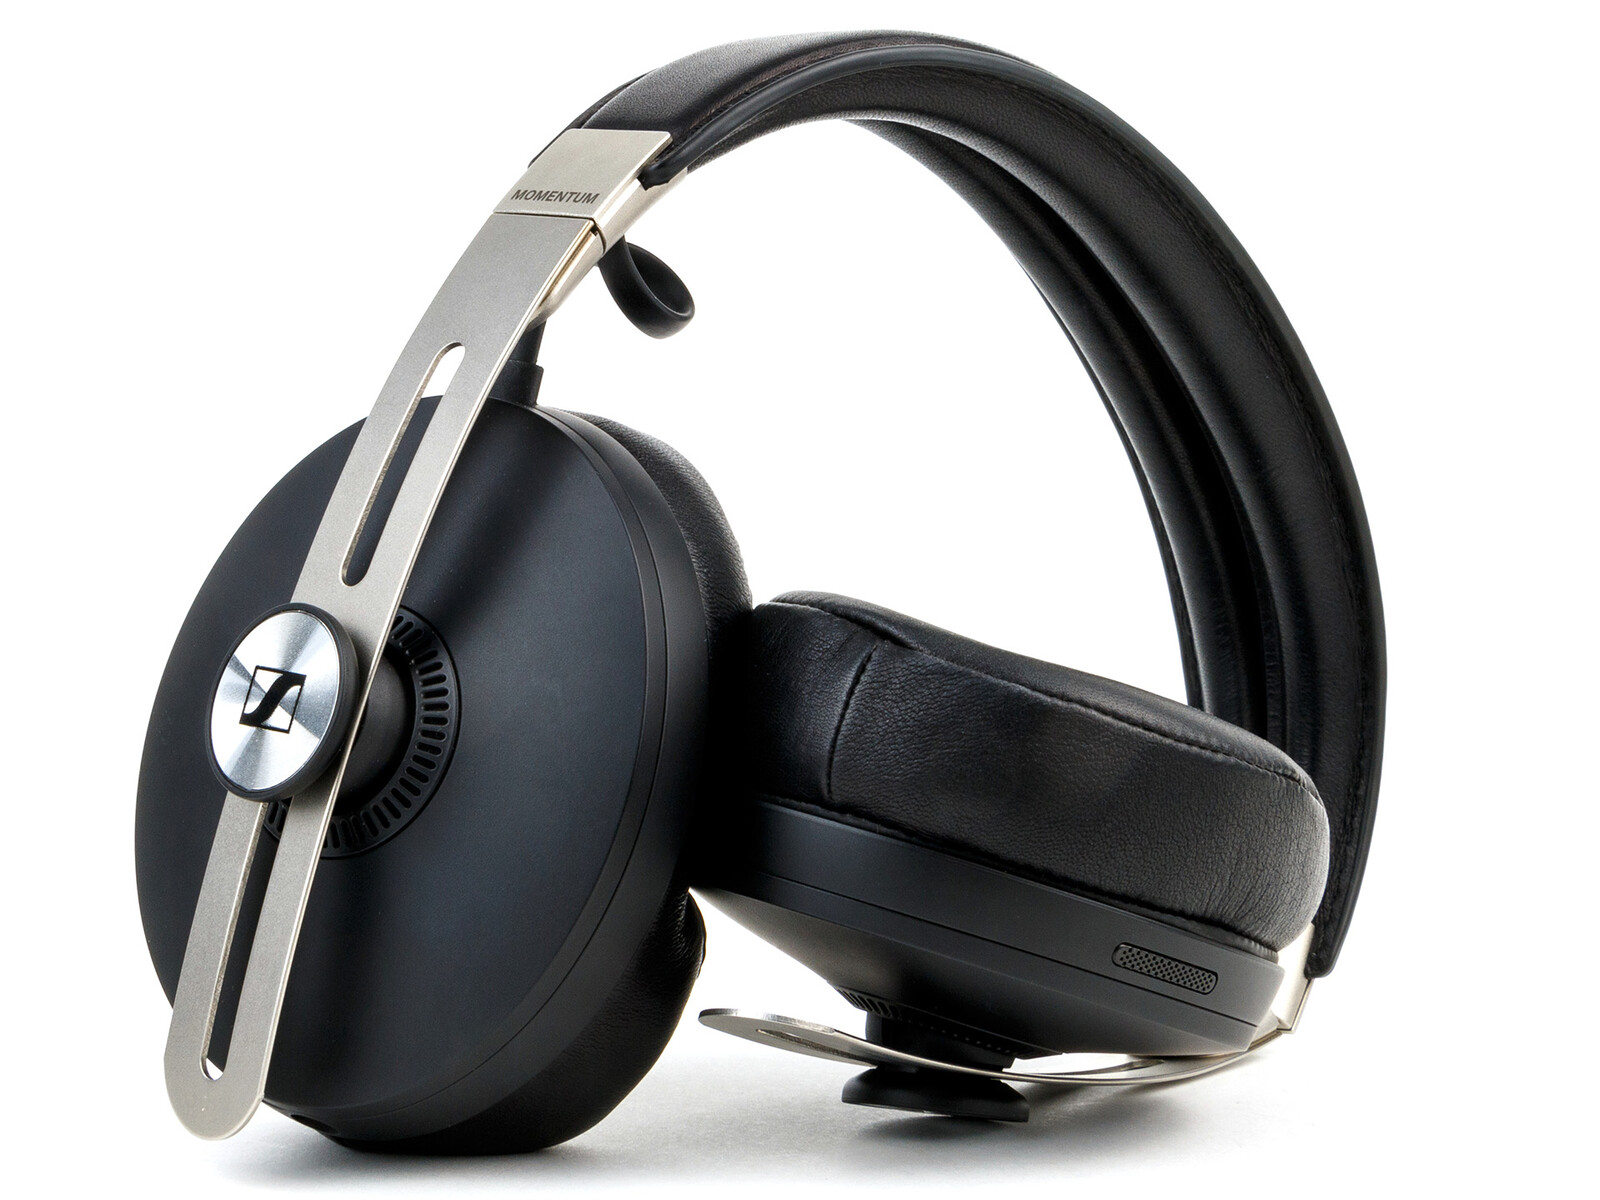 Sennheiser Momentum 3 Wireless Review - Strong ANC headphones with good sound - NotebookCheck.net Reviews